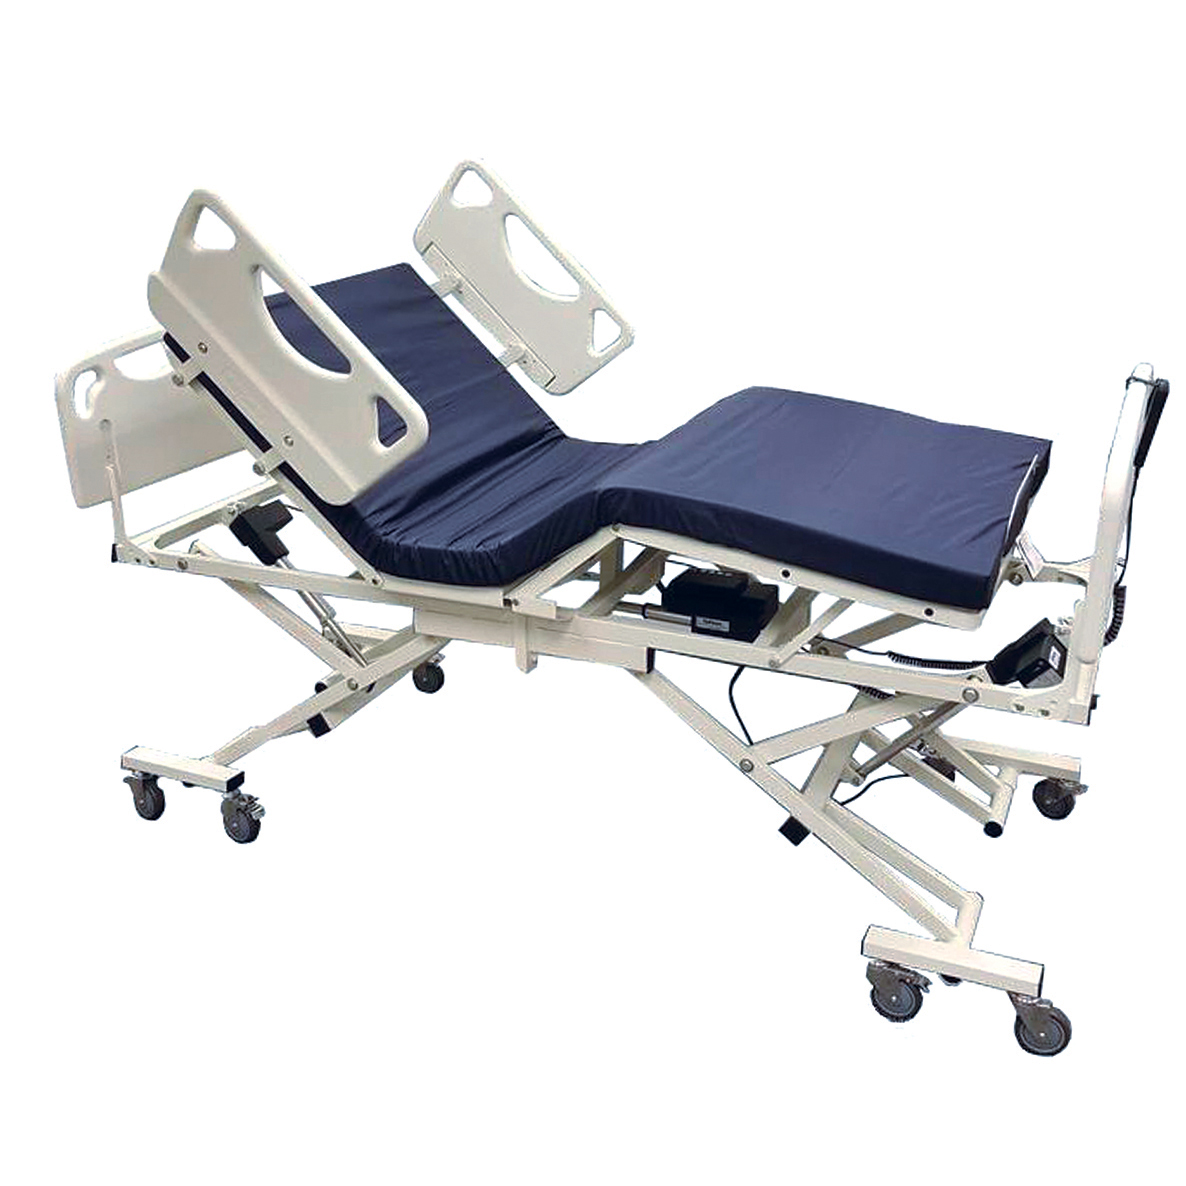 Santa-Ana heavy duty extra wide large bariatric adjustable hospital bed